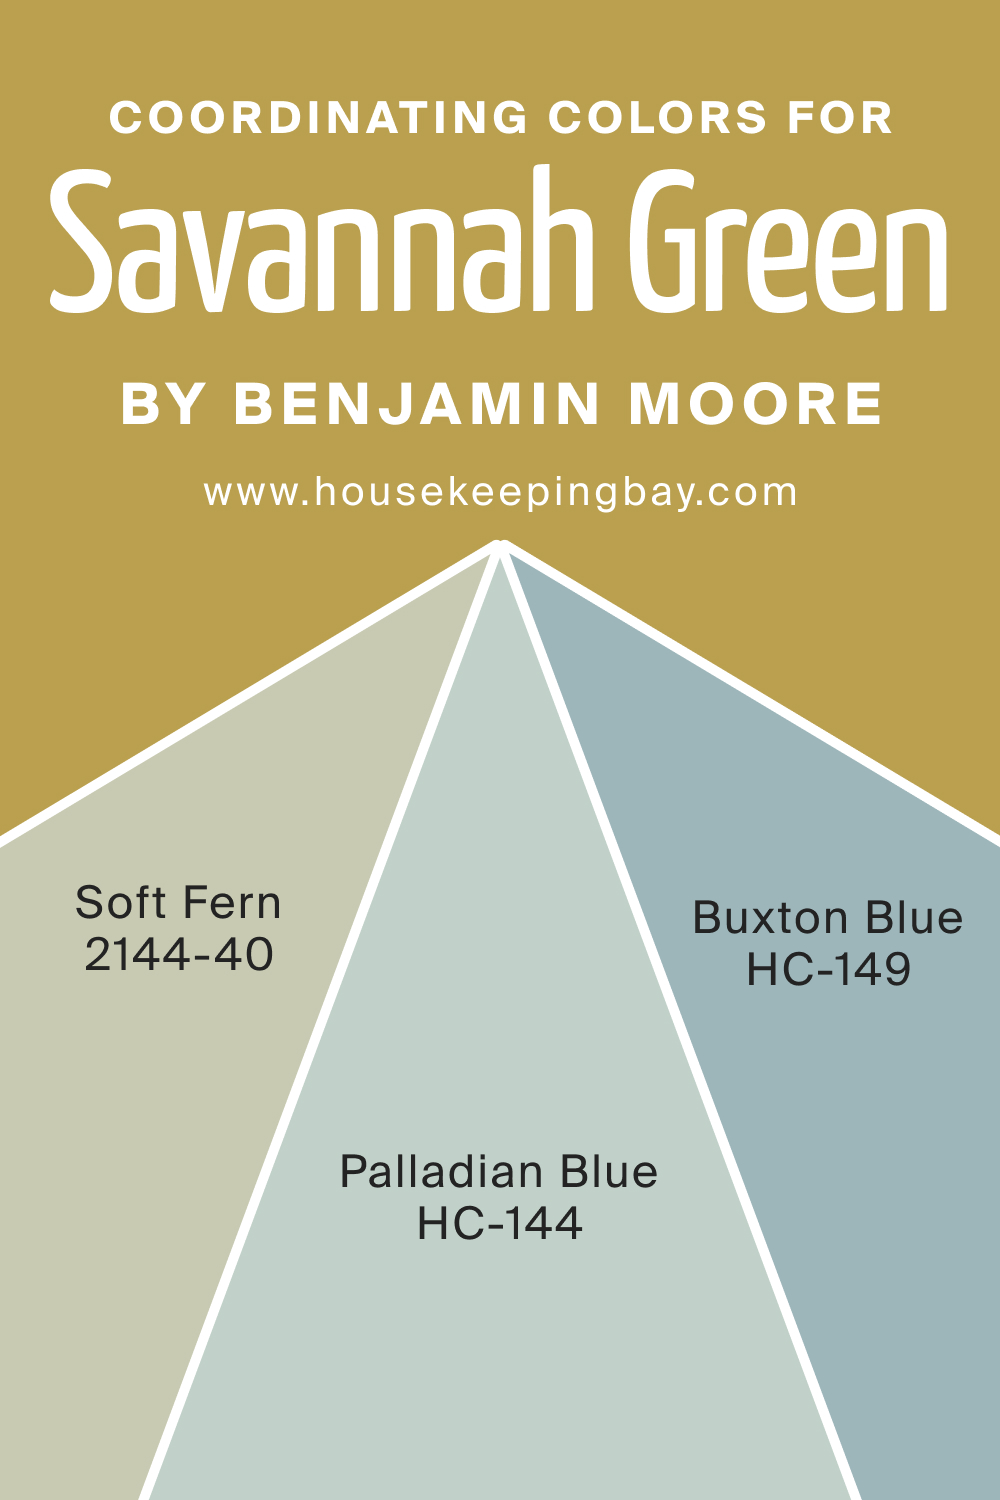 Coordinating Colors for Savannah Green 2150 30 by Benjamin Moore